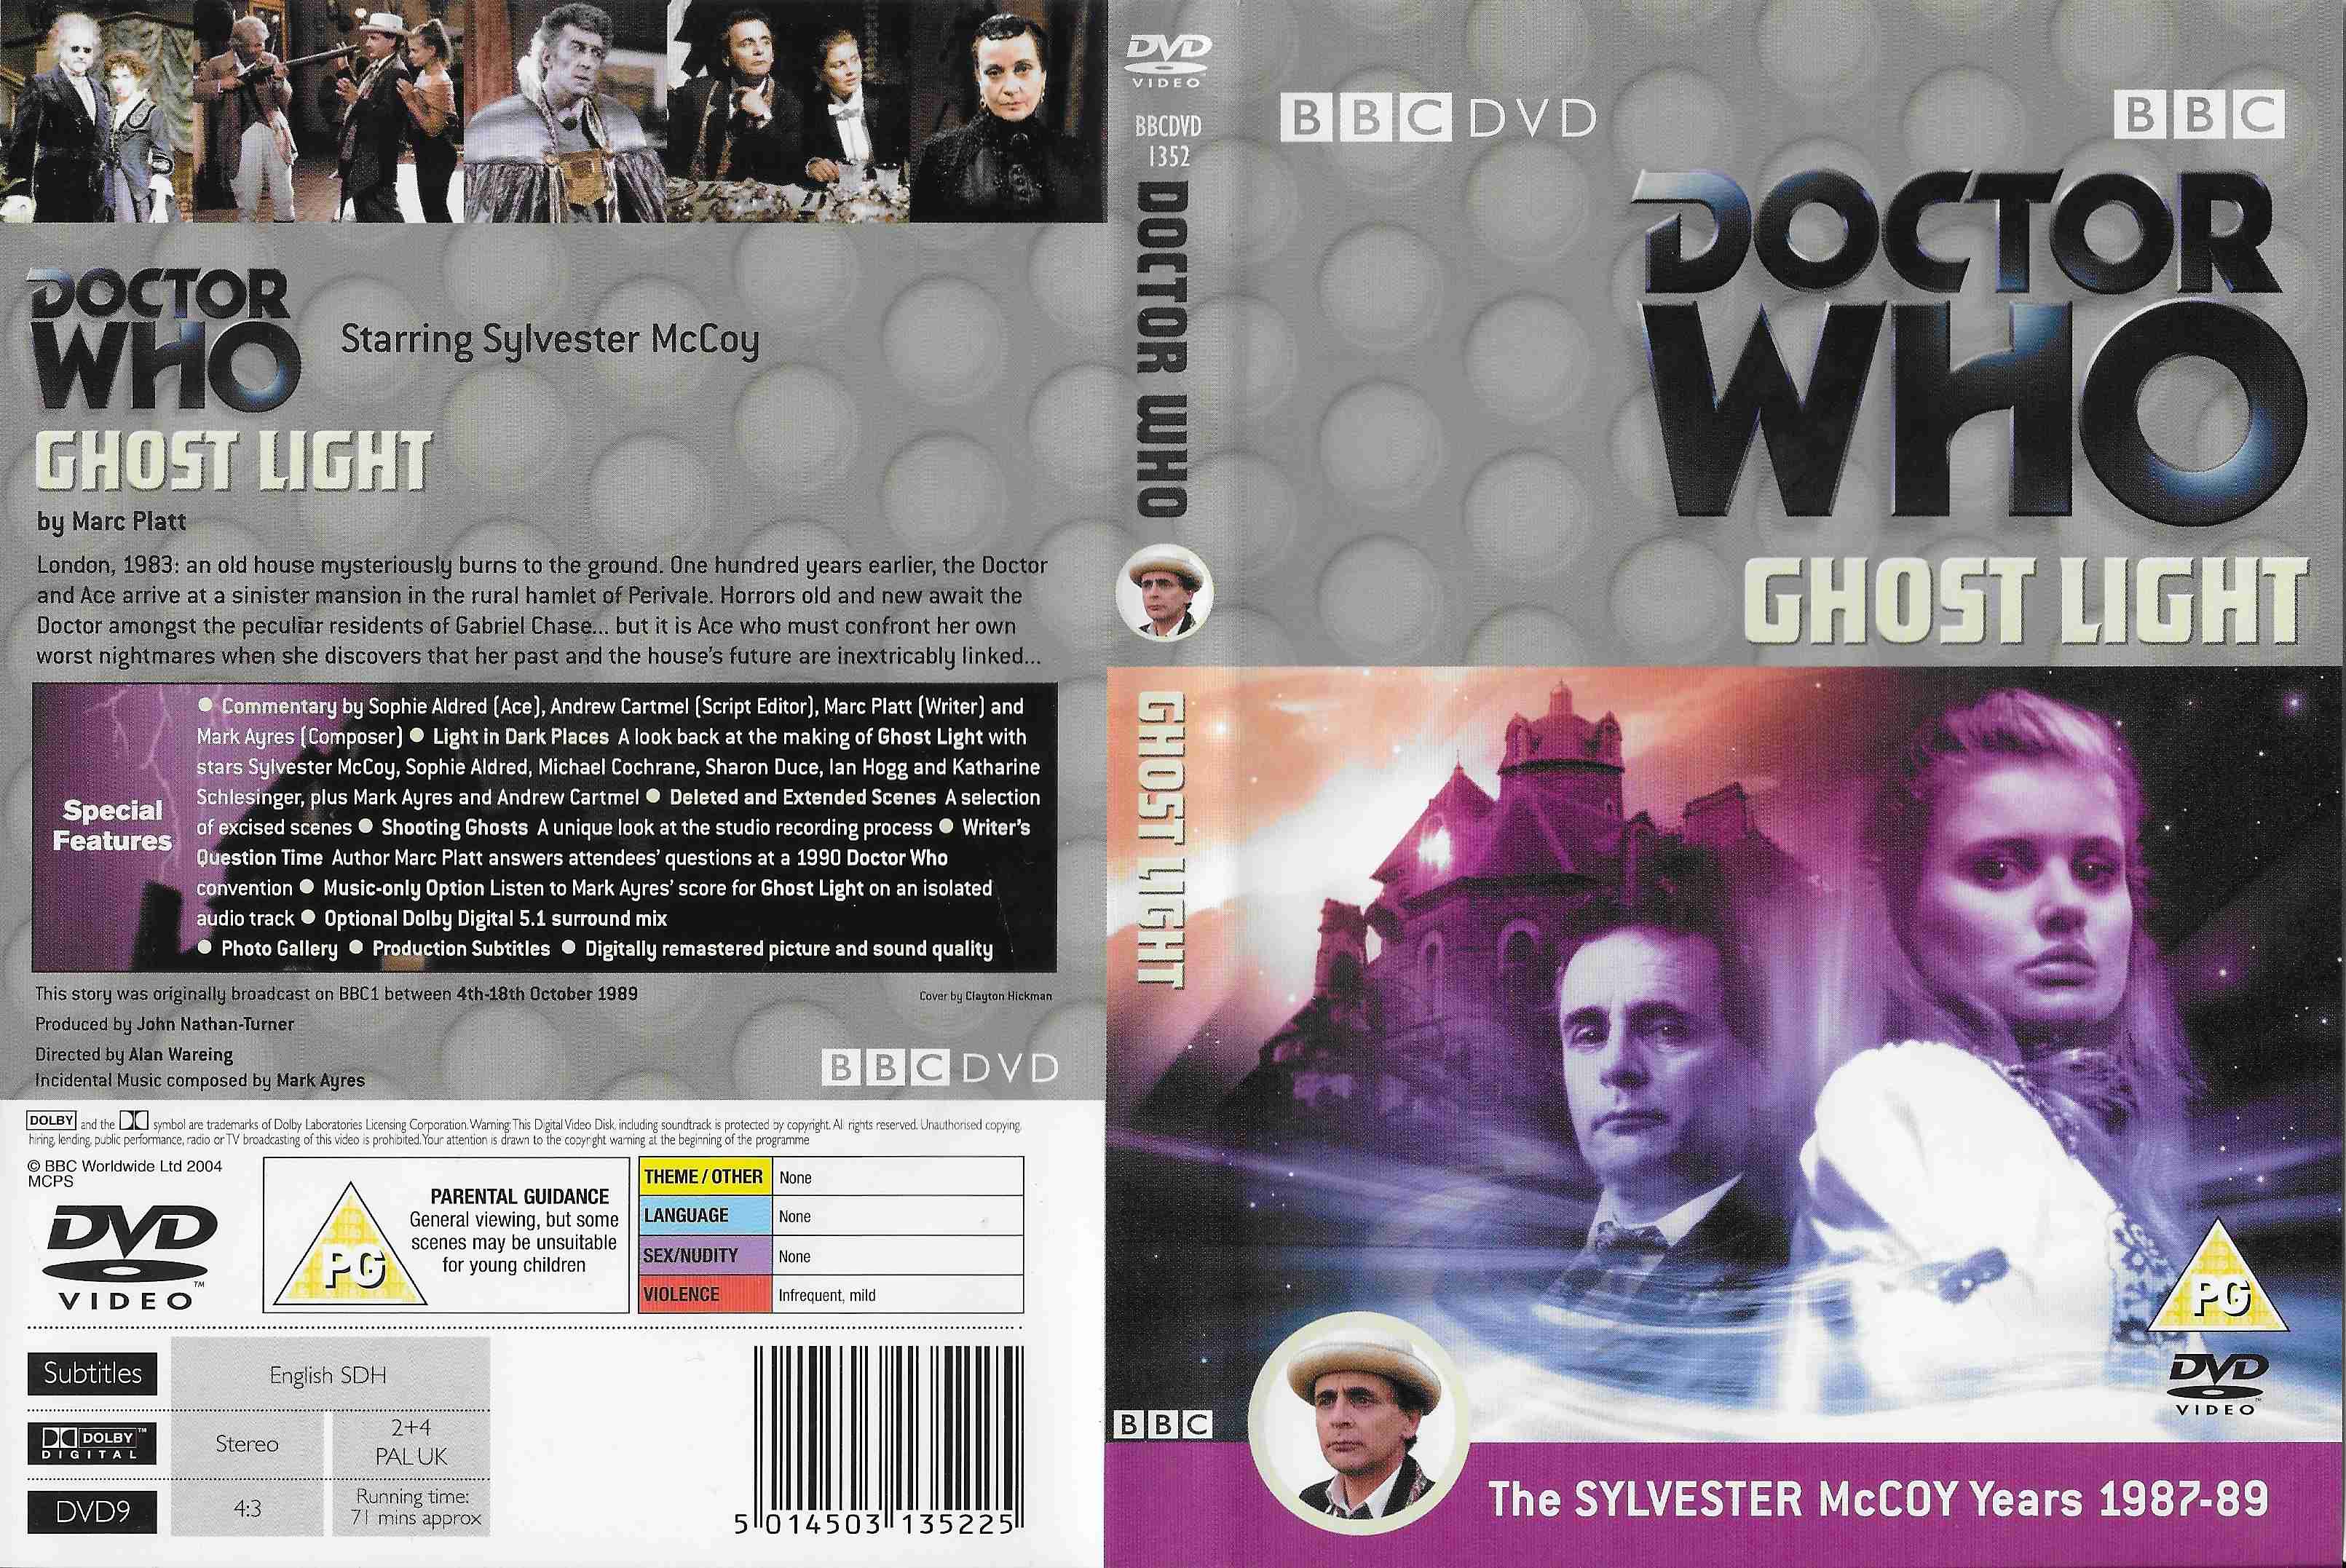 Back cover of BBCDVD 1352